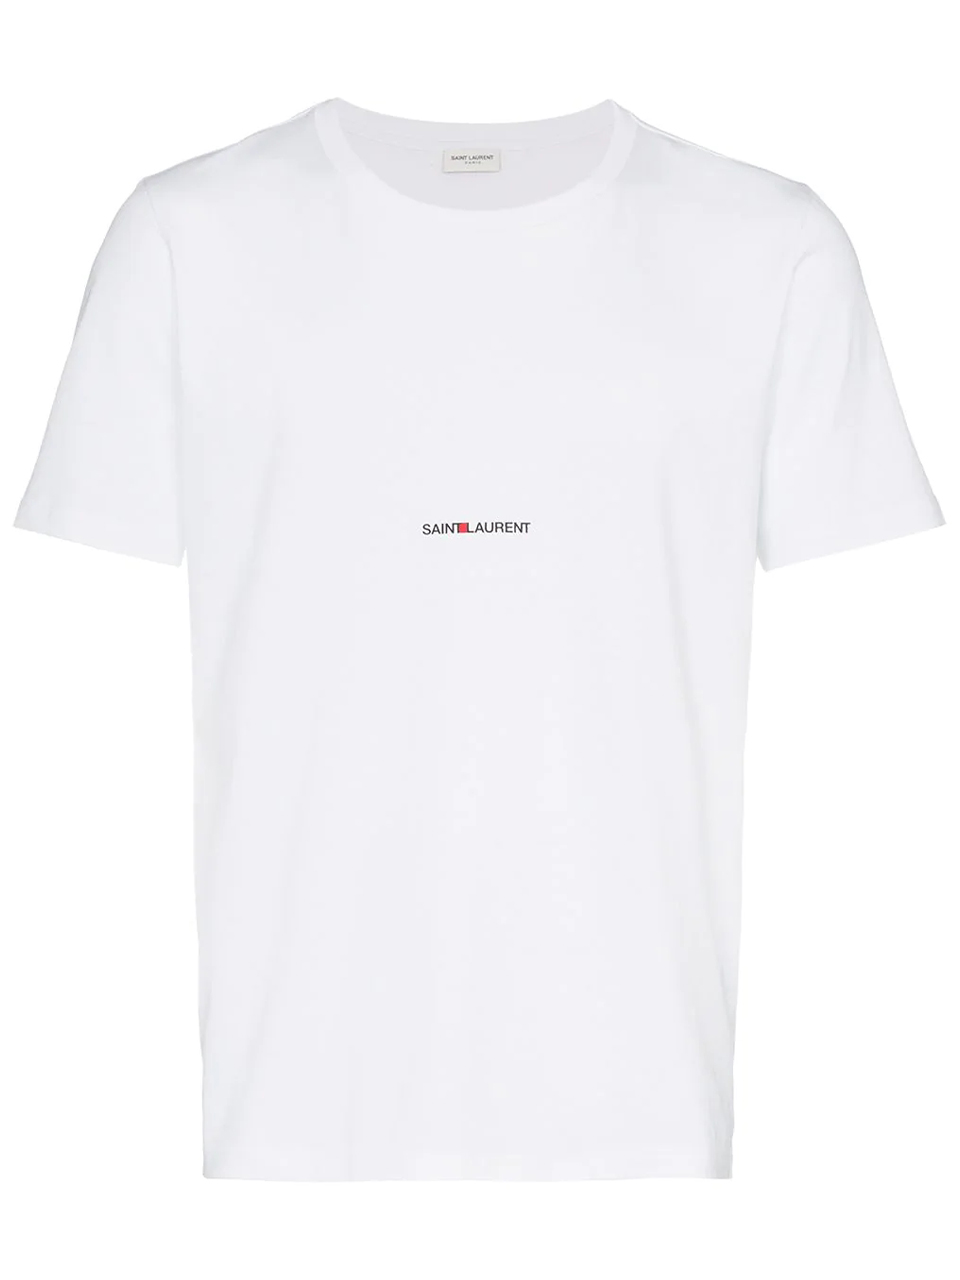 Imagem de: Camiseta Saint Laurent Branca com Logo